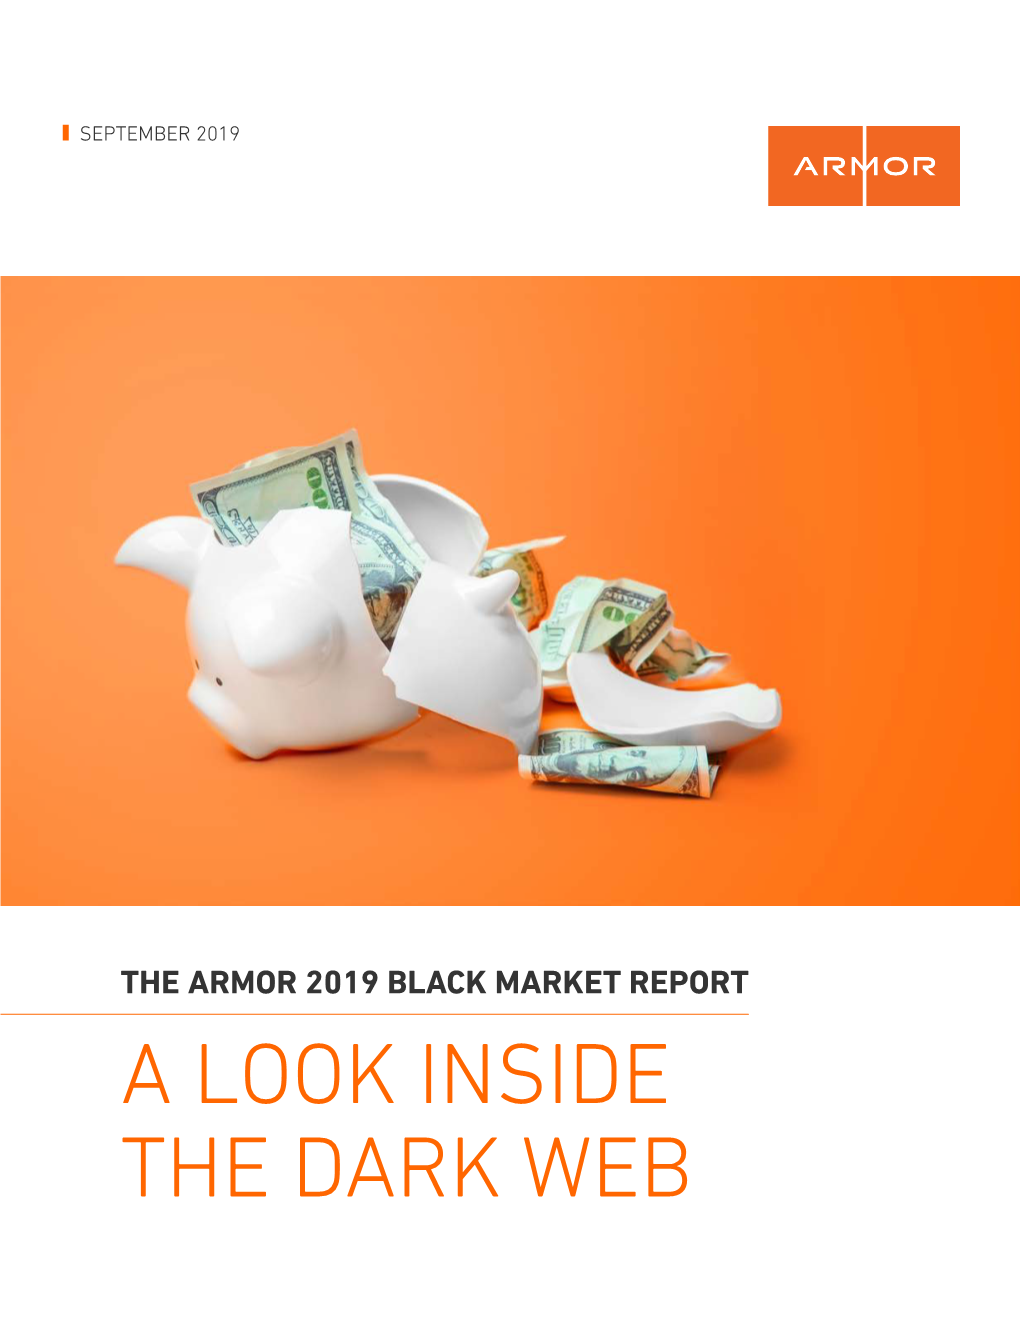 The Armor 2019 Black Market Report a Look Inside the Dark Web the Armor 2019 Black Market Report | a Look Inside the Dark Web